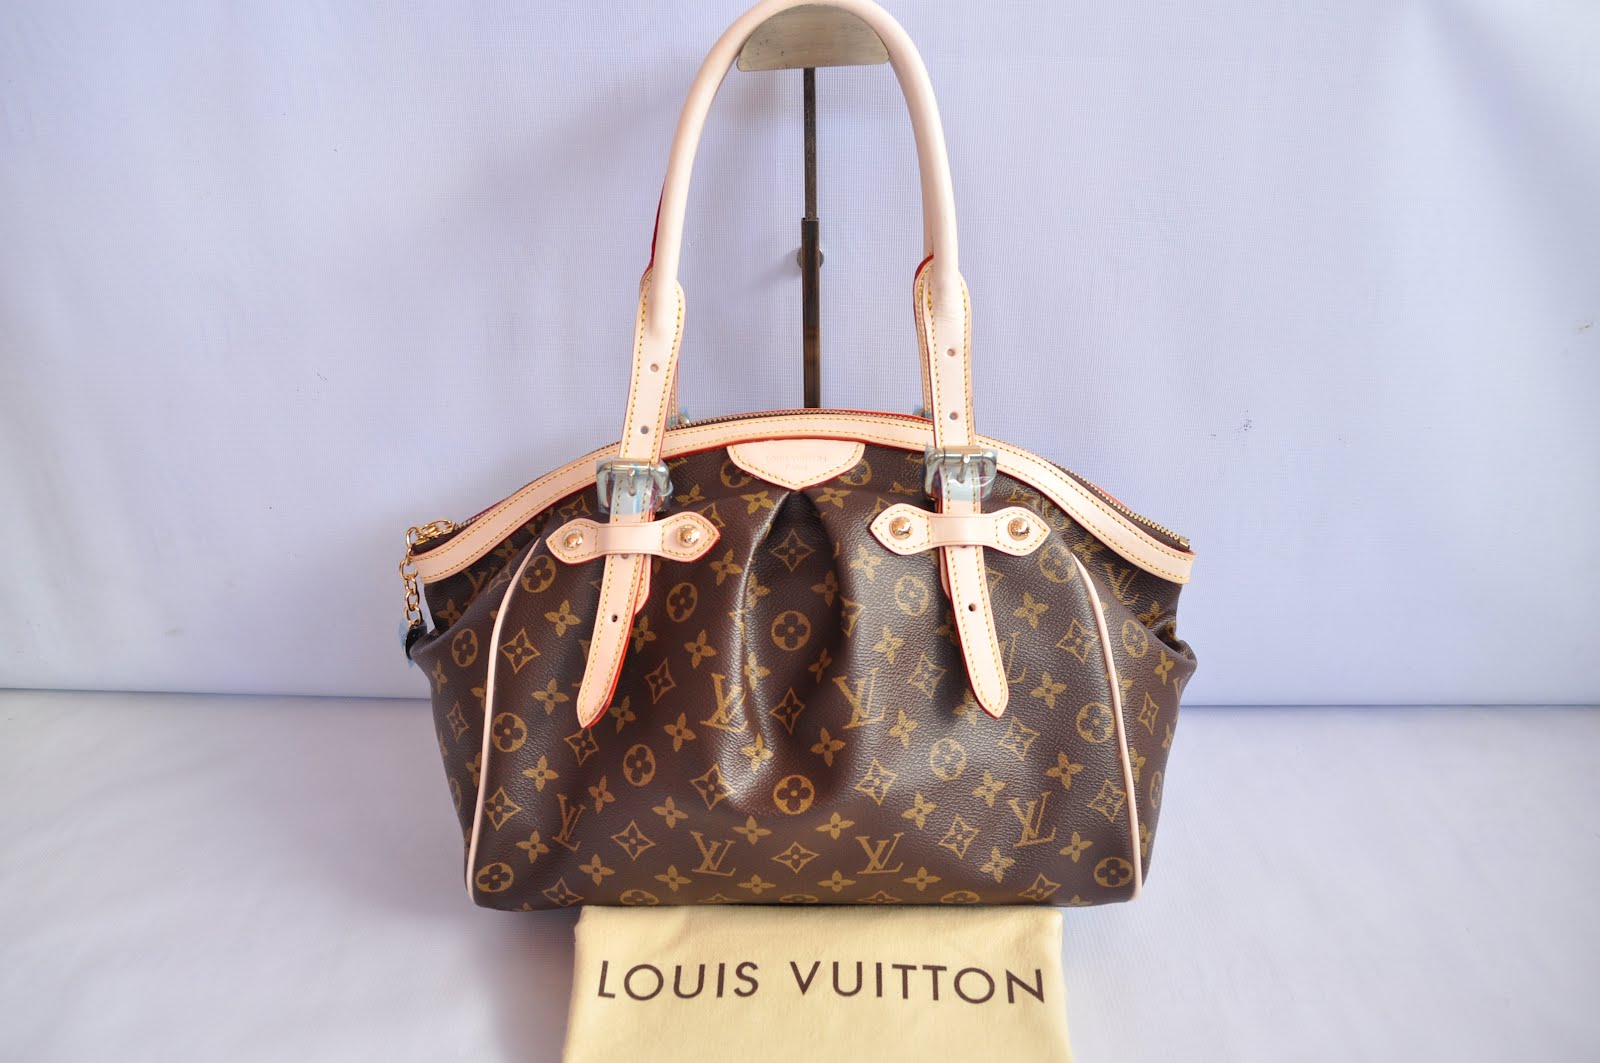 Imitation Louis Vuitton Bag | Jaguar Clubs of North America